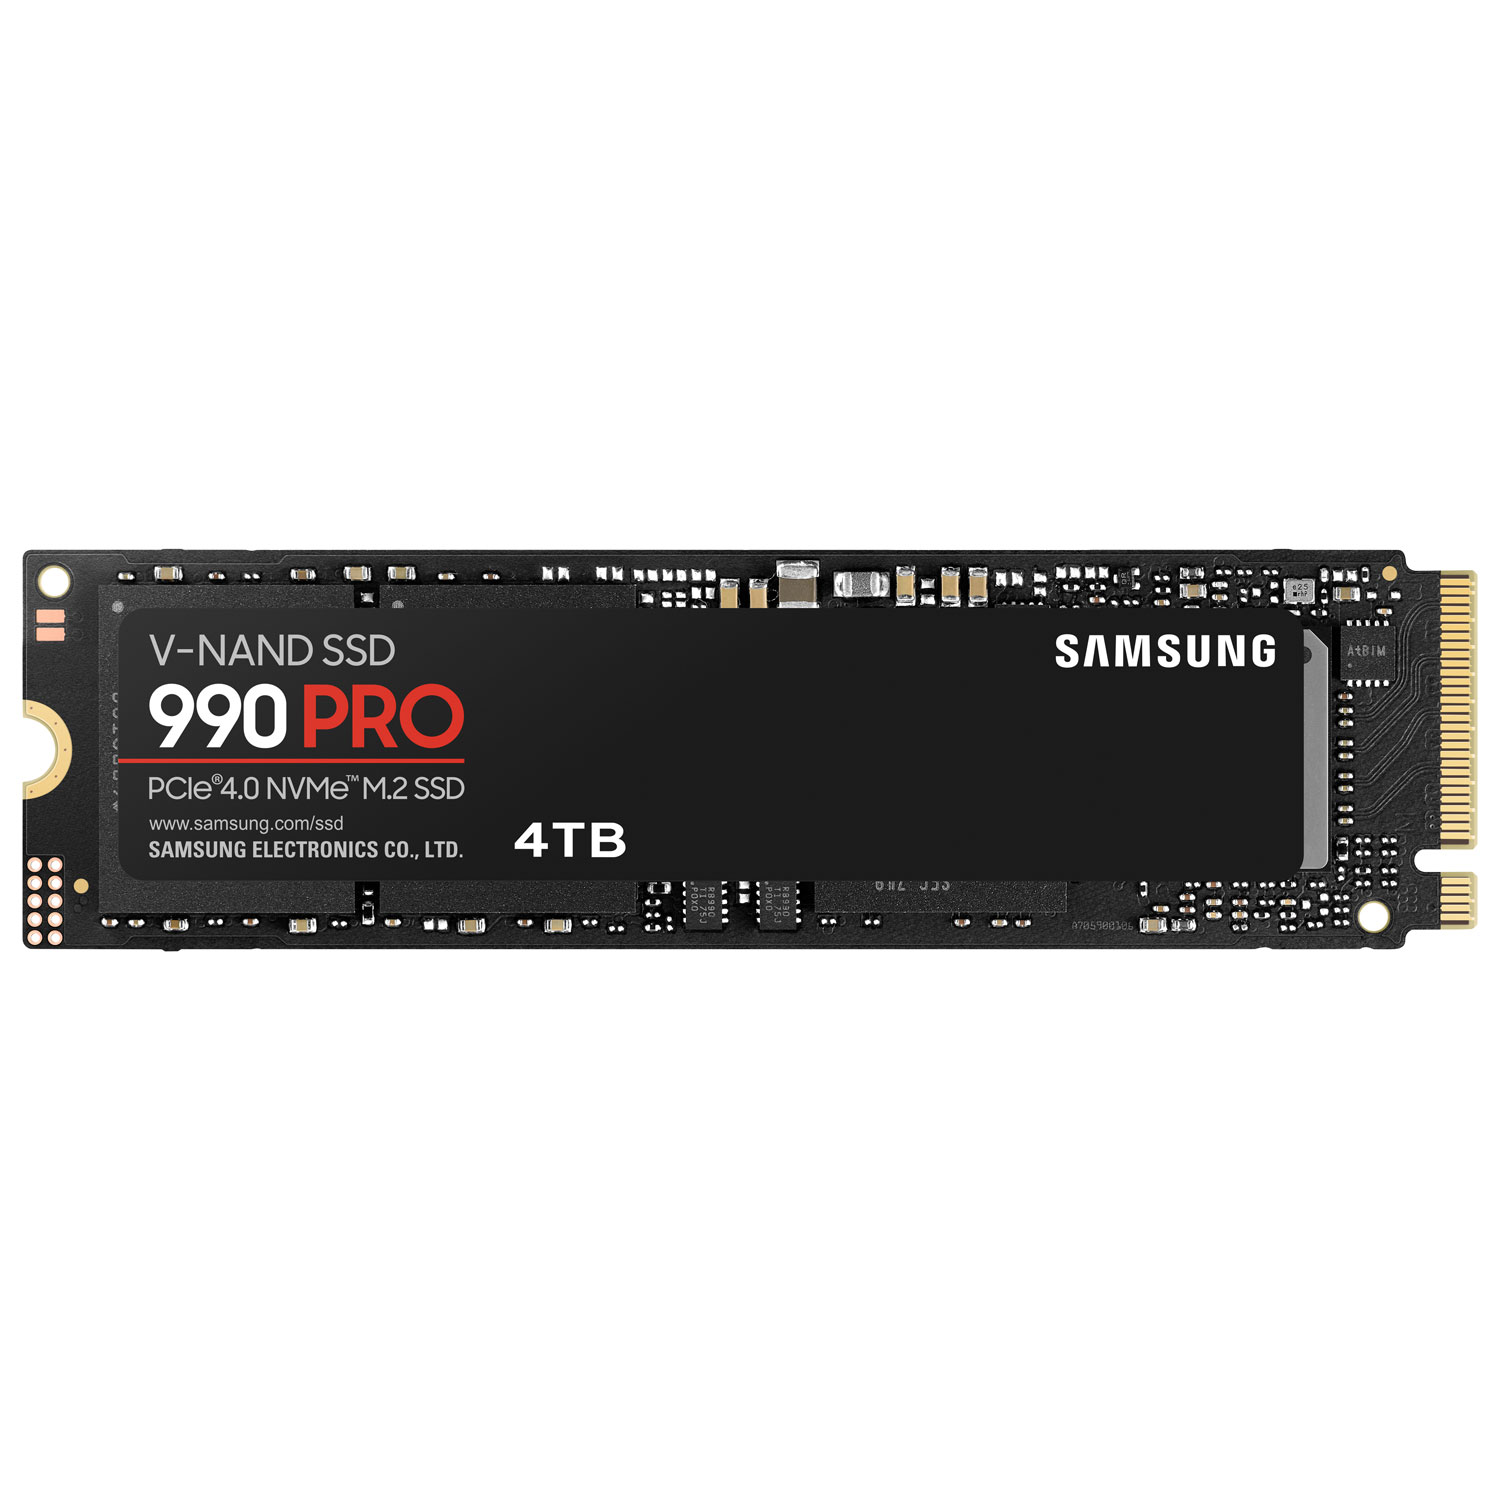 Samsung 990 PRO 4TB NVMe PCI-e Internal Solid State Drive (MZ-V9P4T0B/AMF) - Black/Red